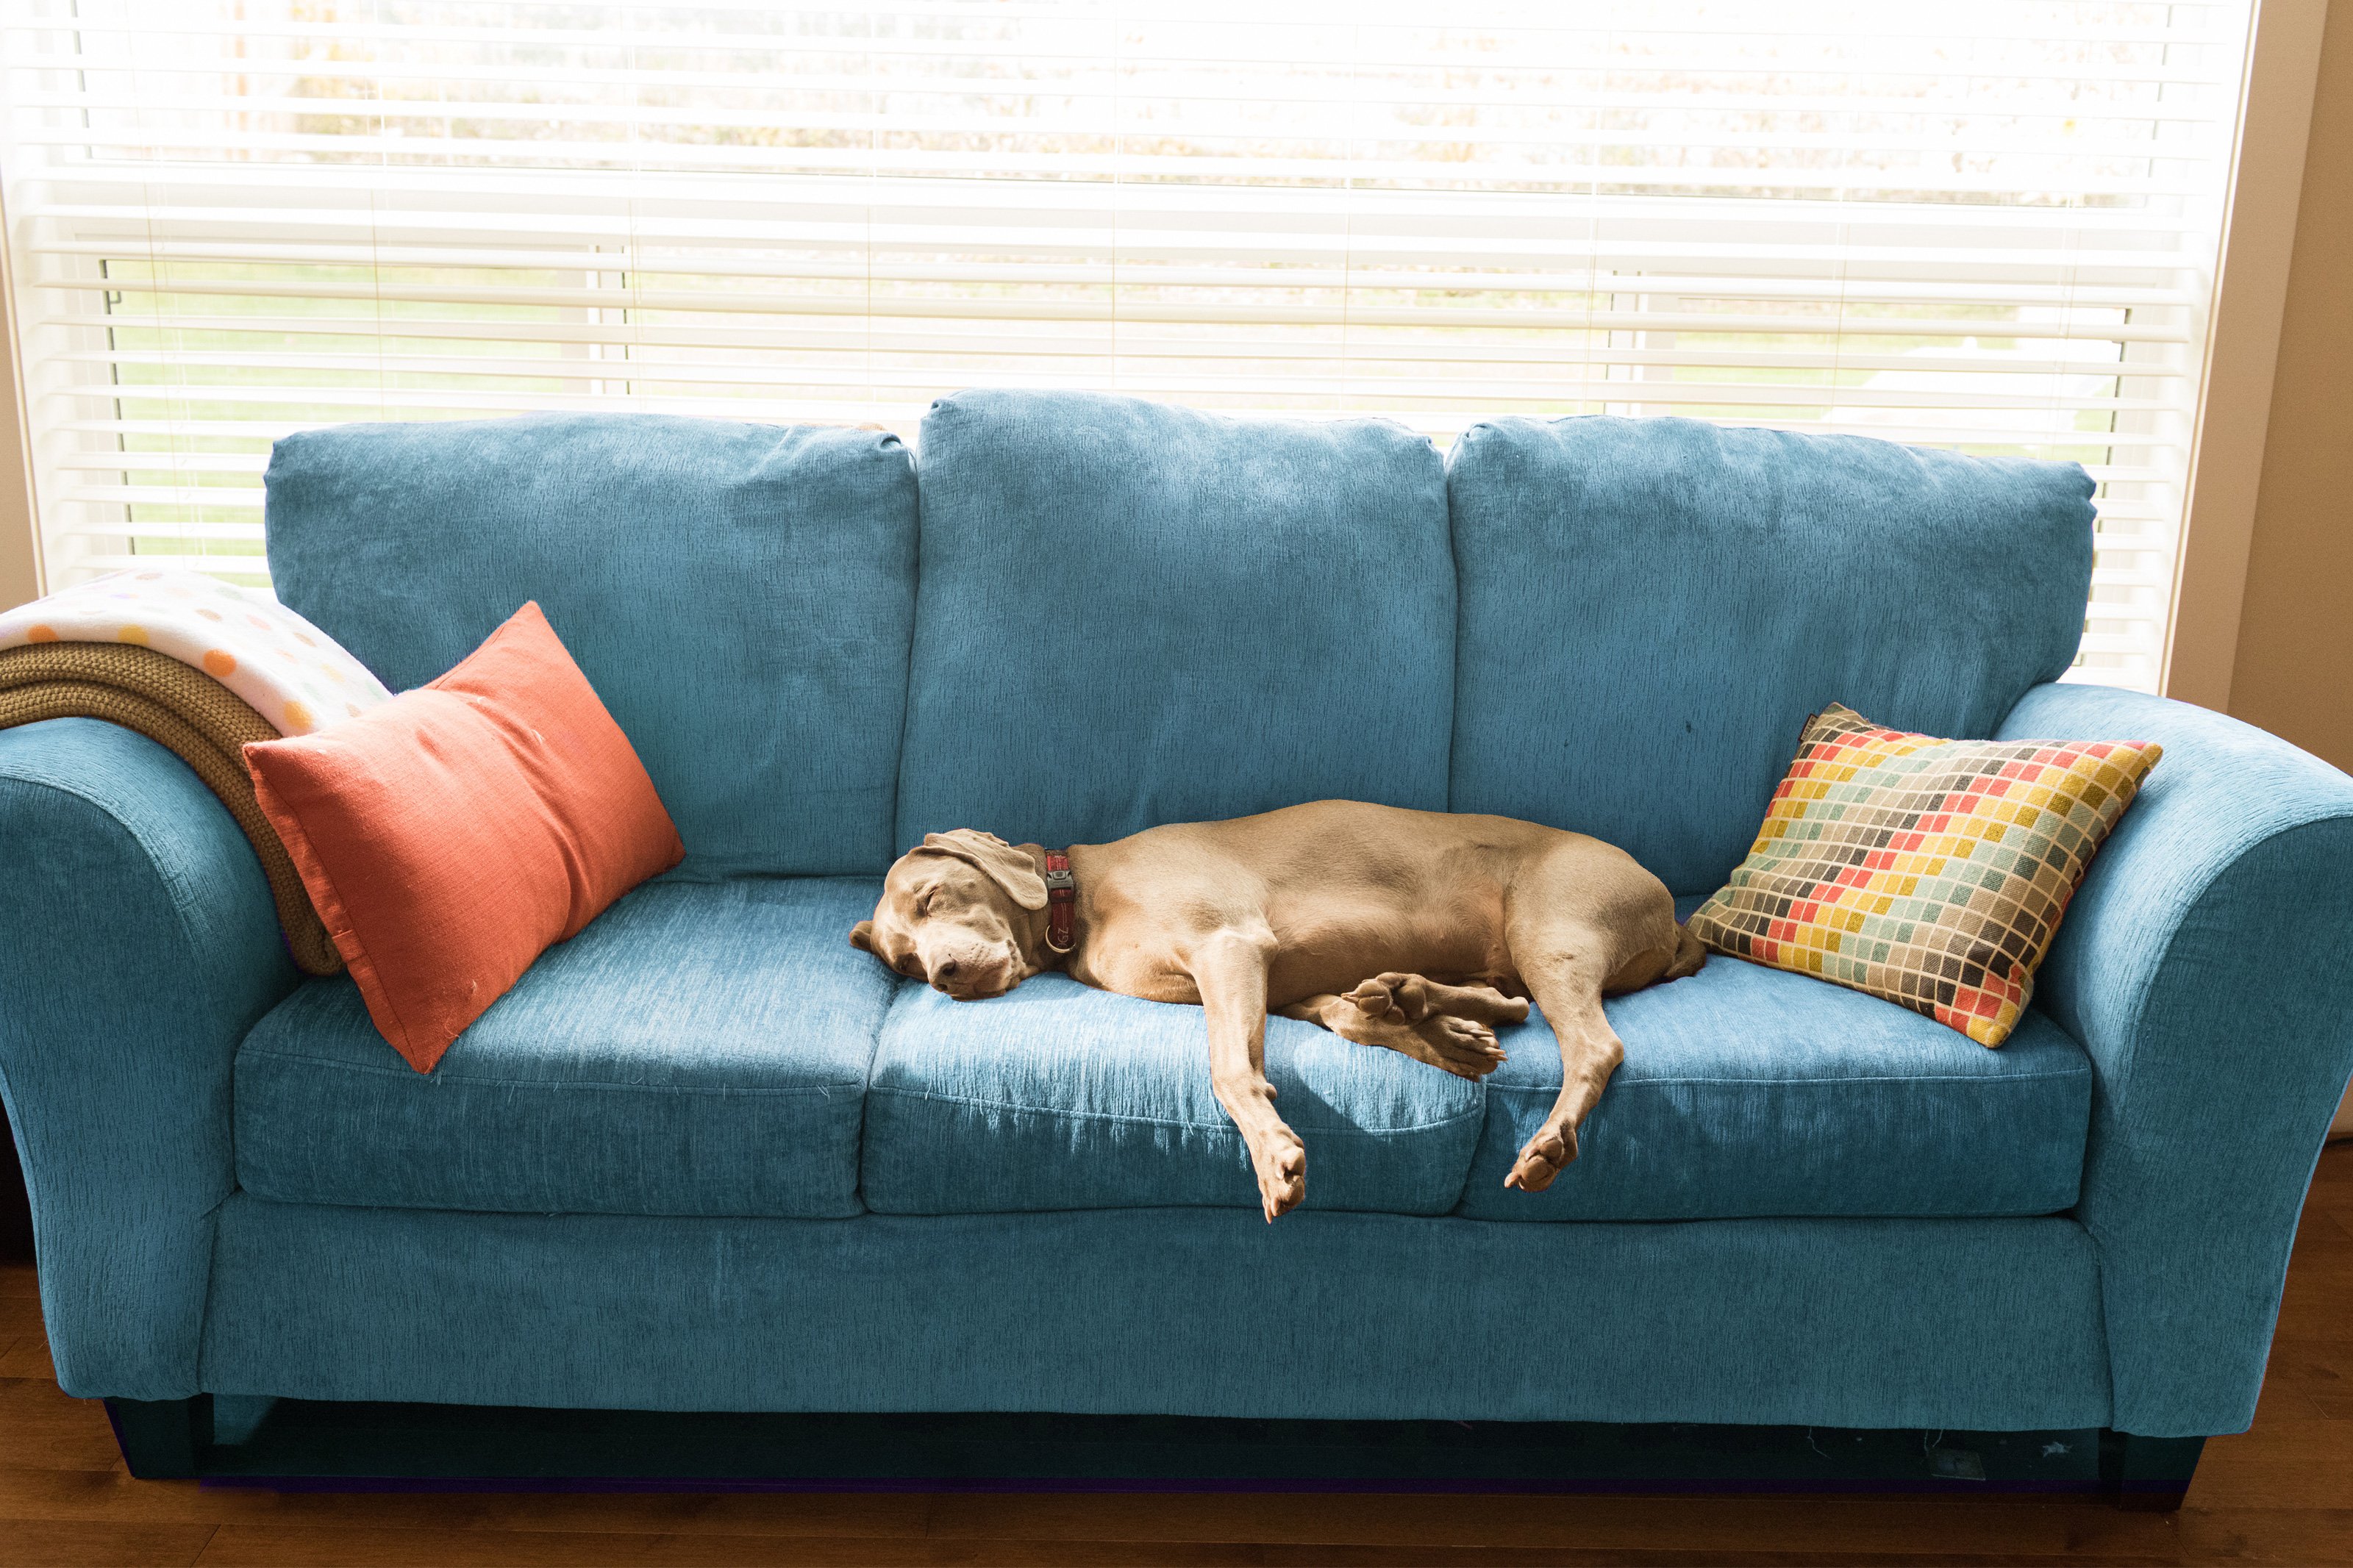 Clean диван. Под диваном. Диван для собаки. Домашние животные на диване. Тюлень на диване.